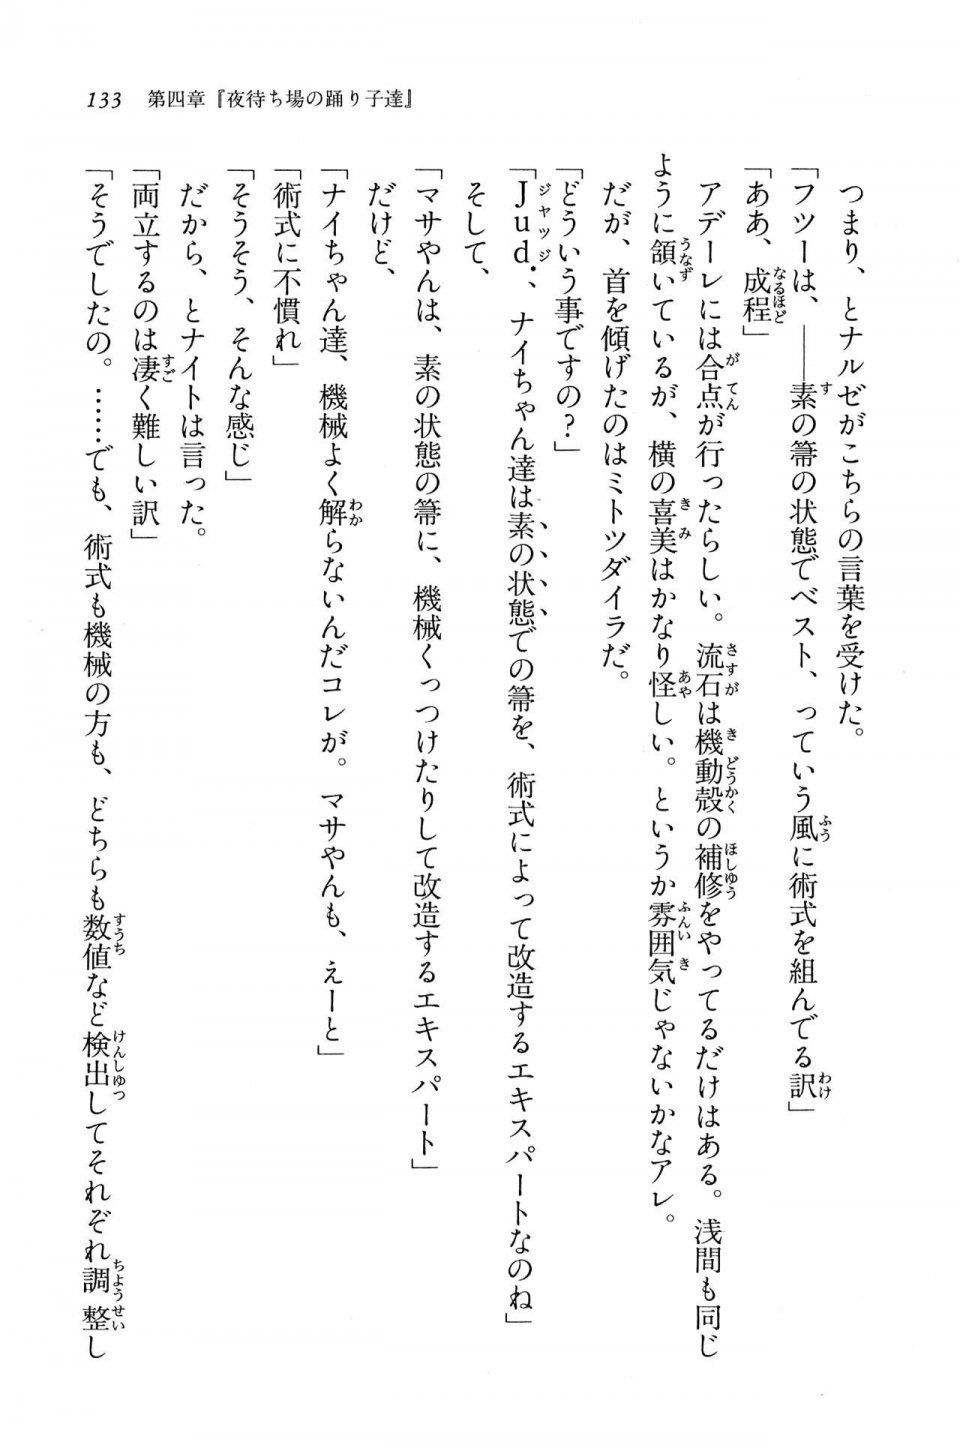 Kyoukai Senjou no Horizon BD Special Mininovel Vol 7(4A) - Photo #137